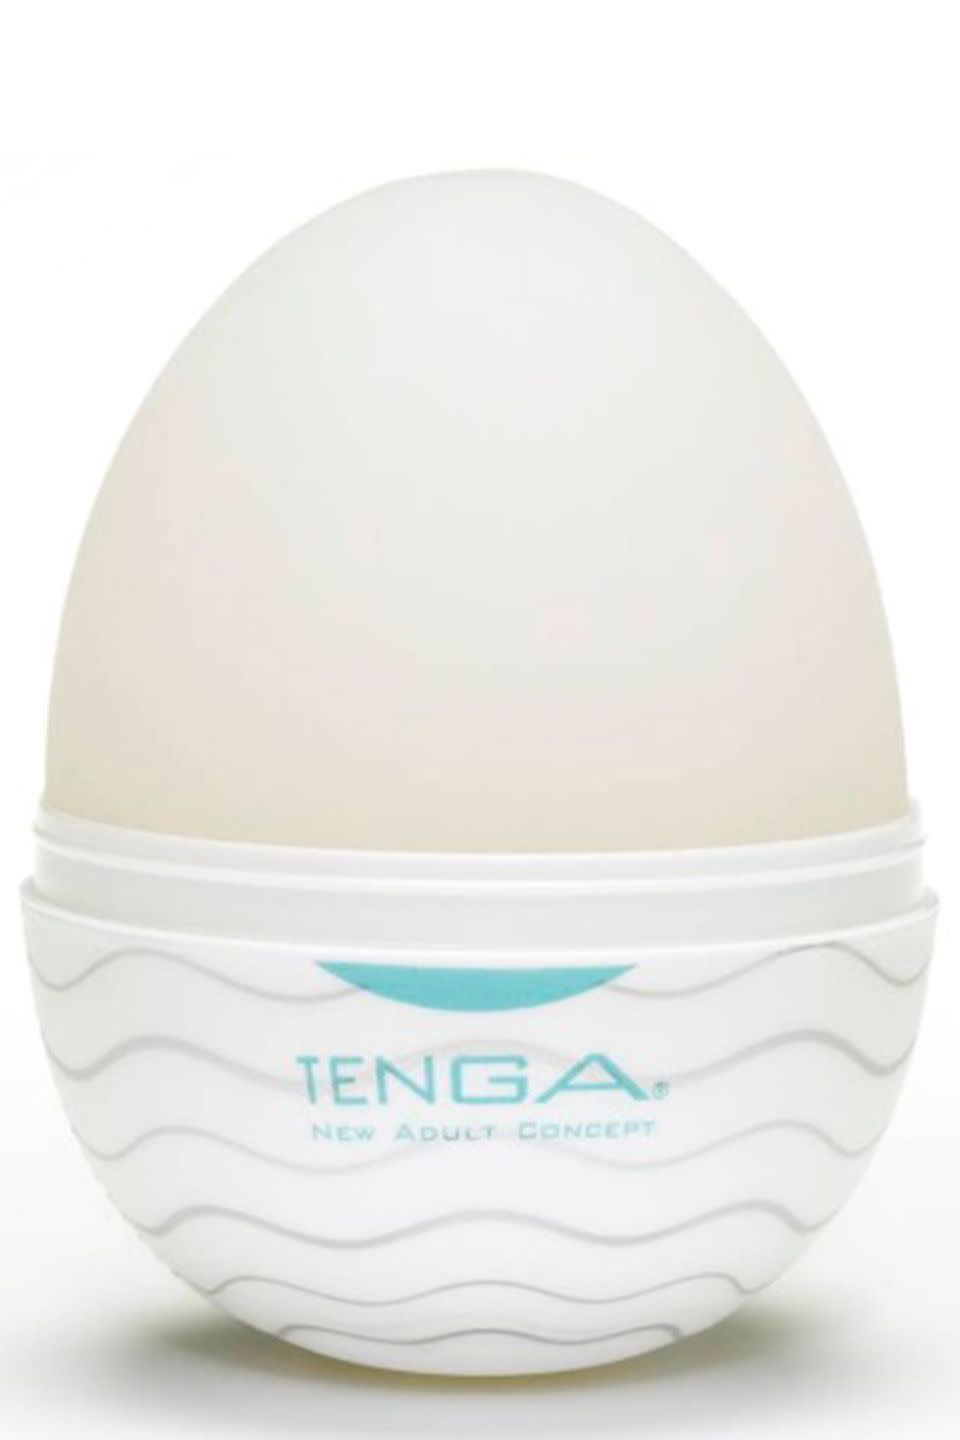 Cheap sex toys - TENGA Egg Wavy Textured Masturbator